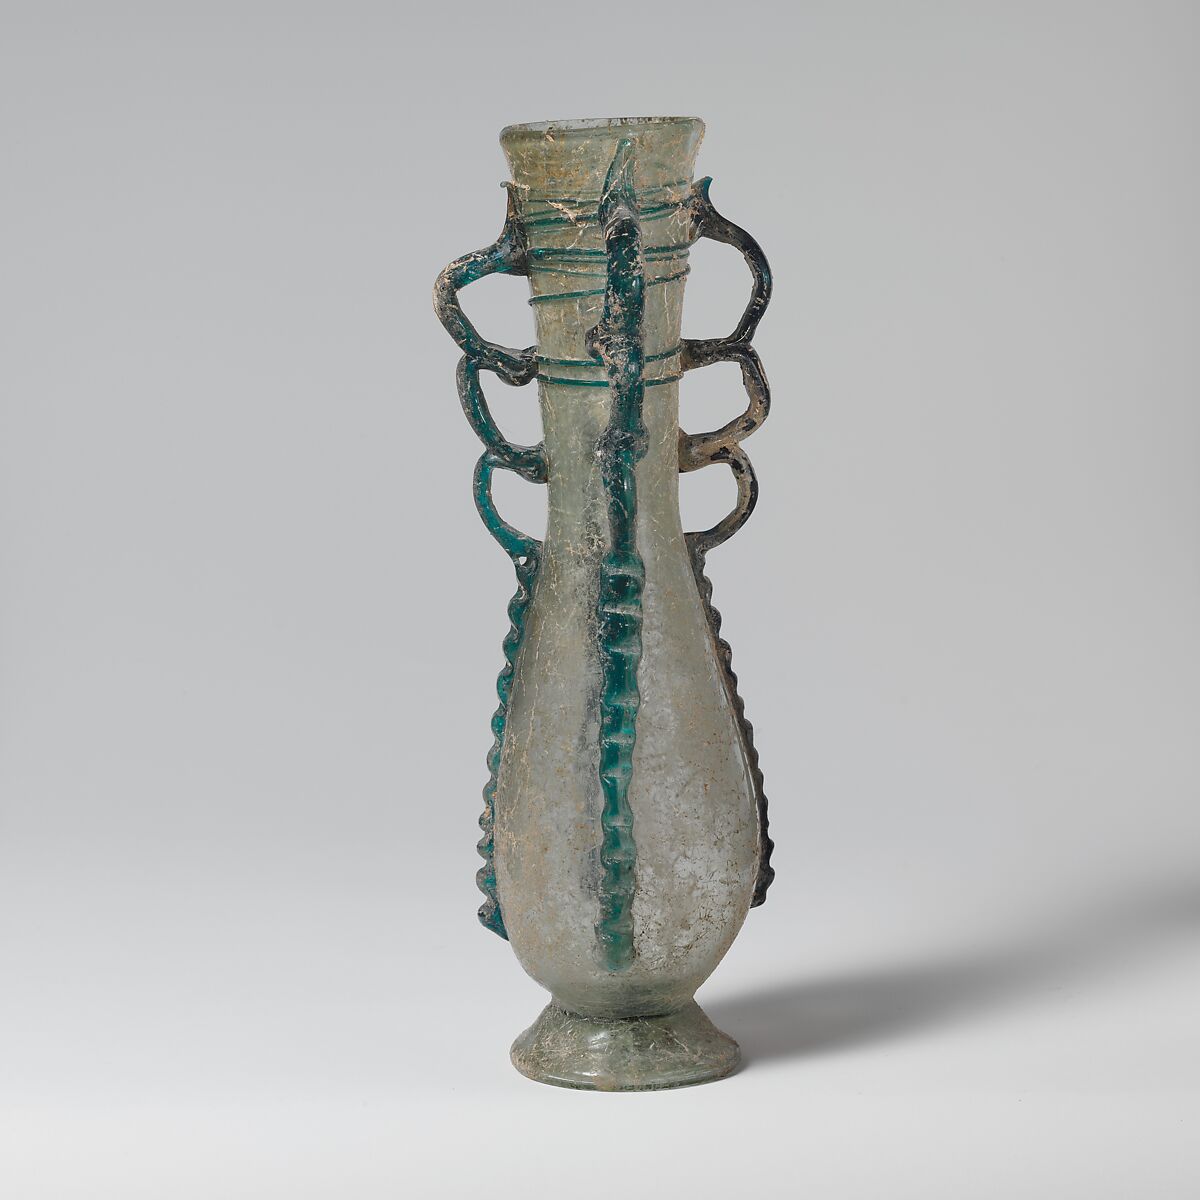 Glass flask, Glass, Roman, Syrian 